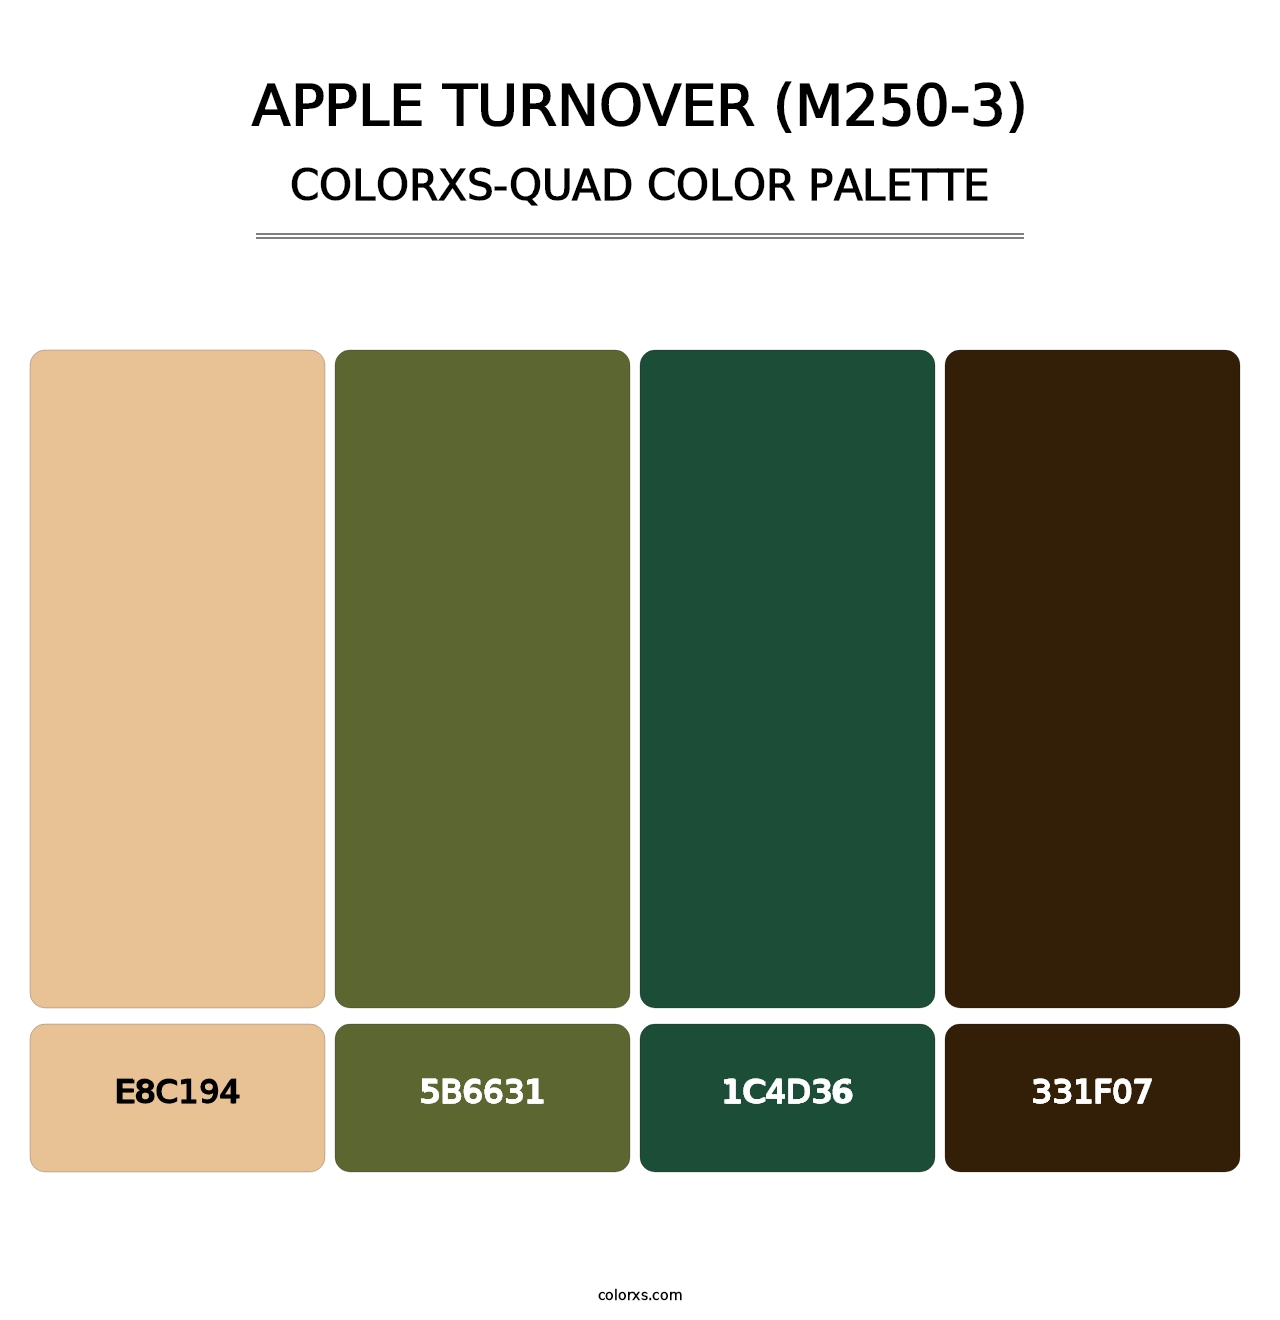 Apple Turnover (M250-3) - Colorxs Quad Palette